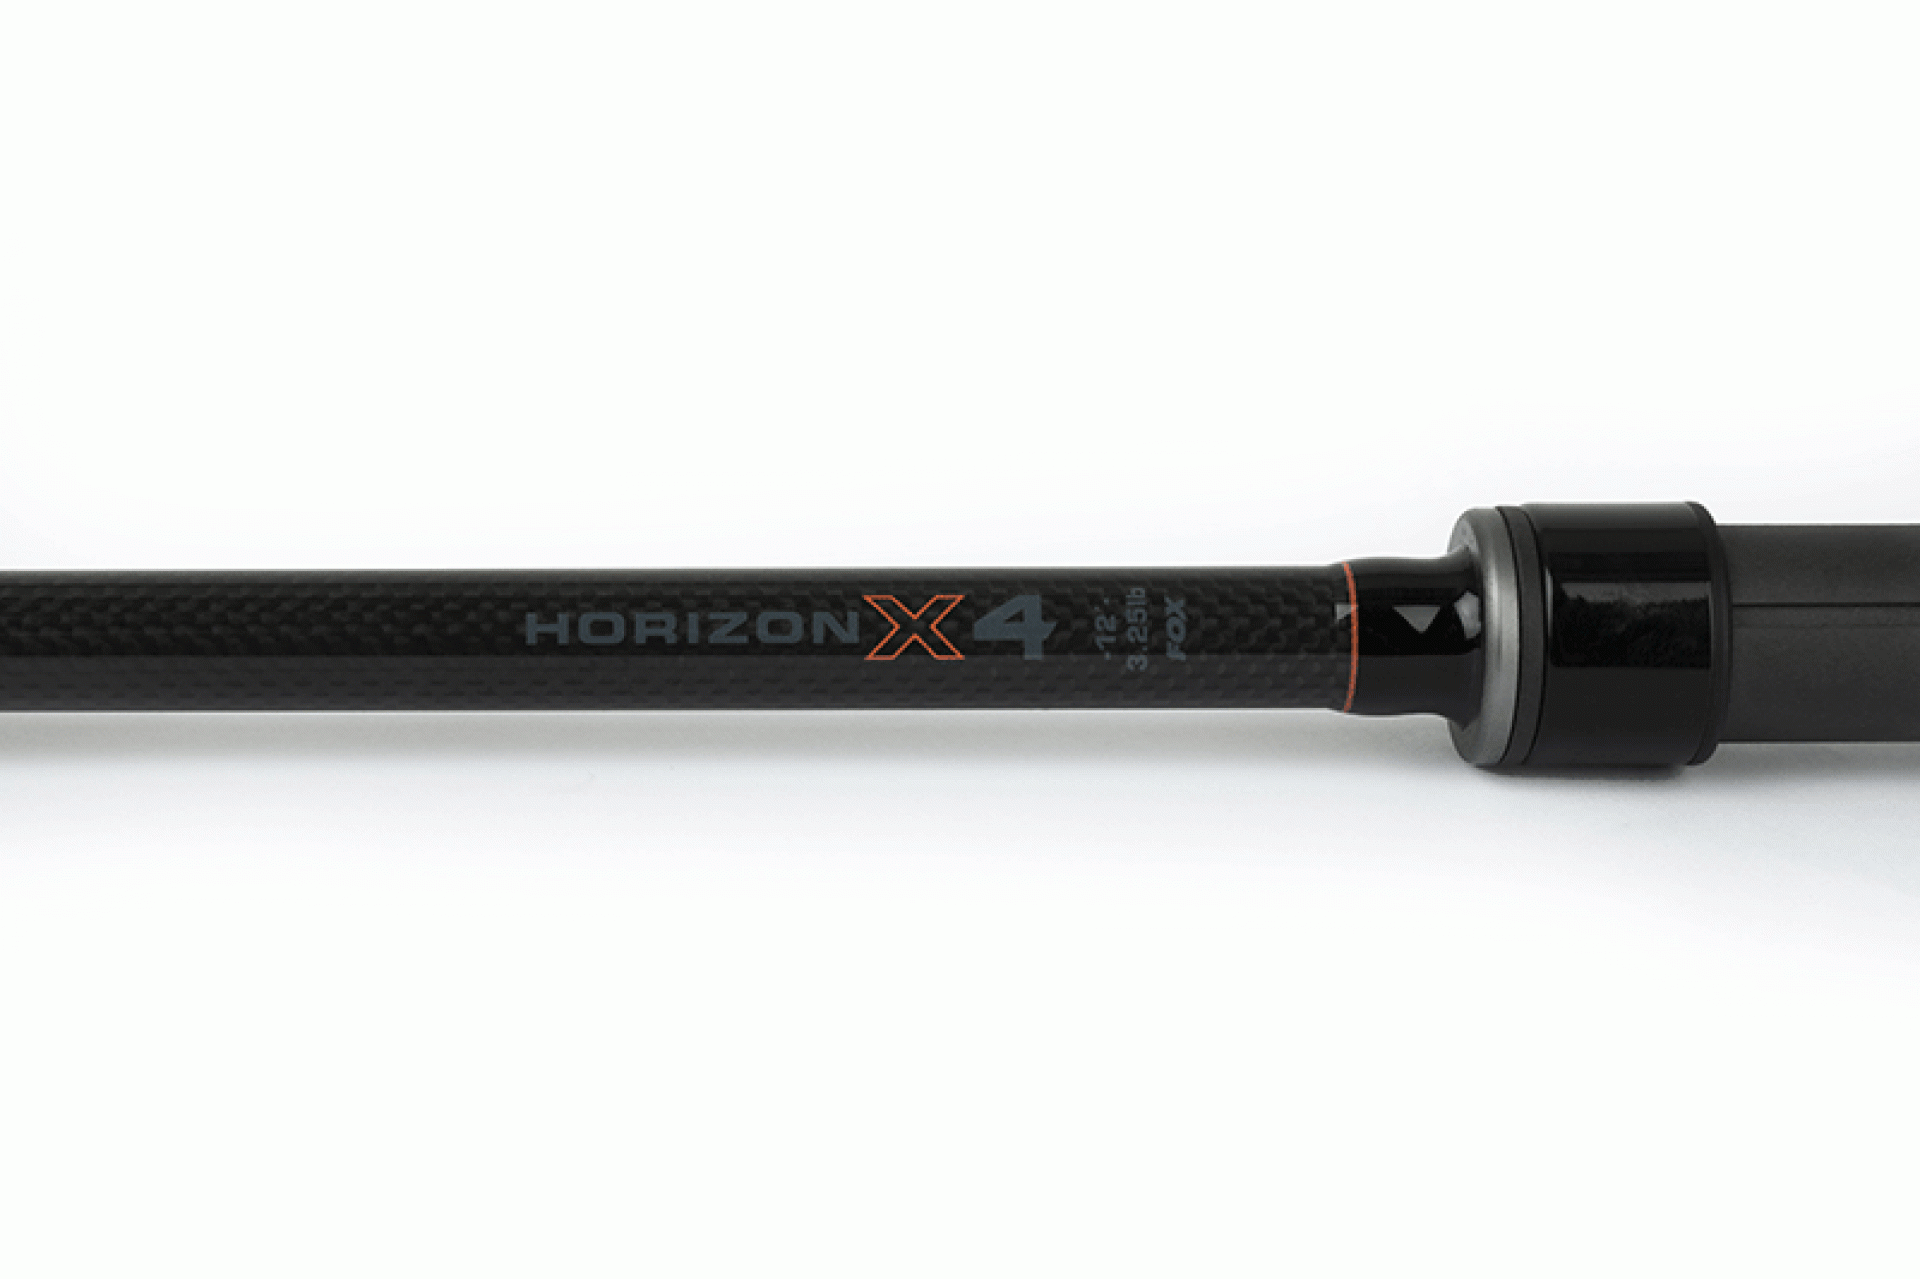 Fox Horizon X4 Abbreviated